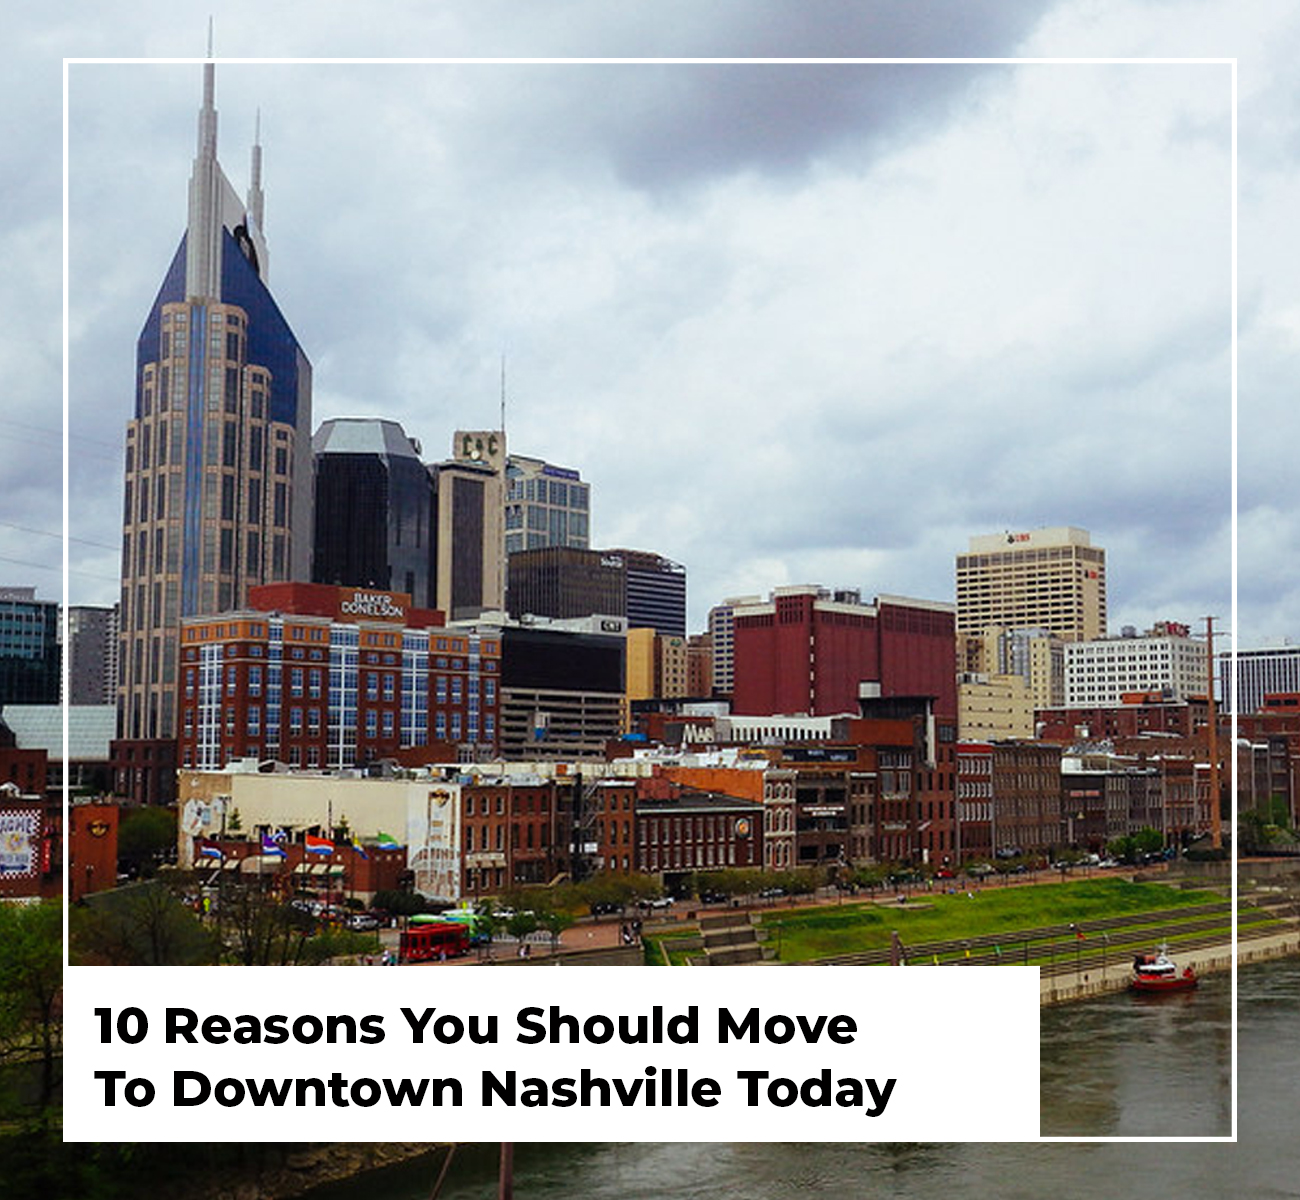 Moving Downtown Nashville